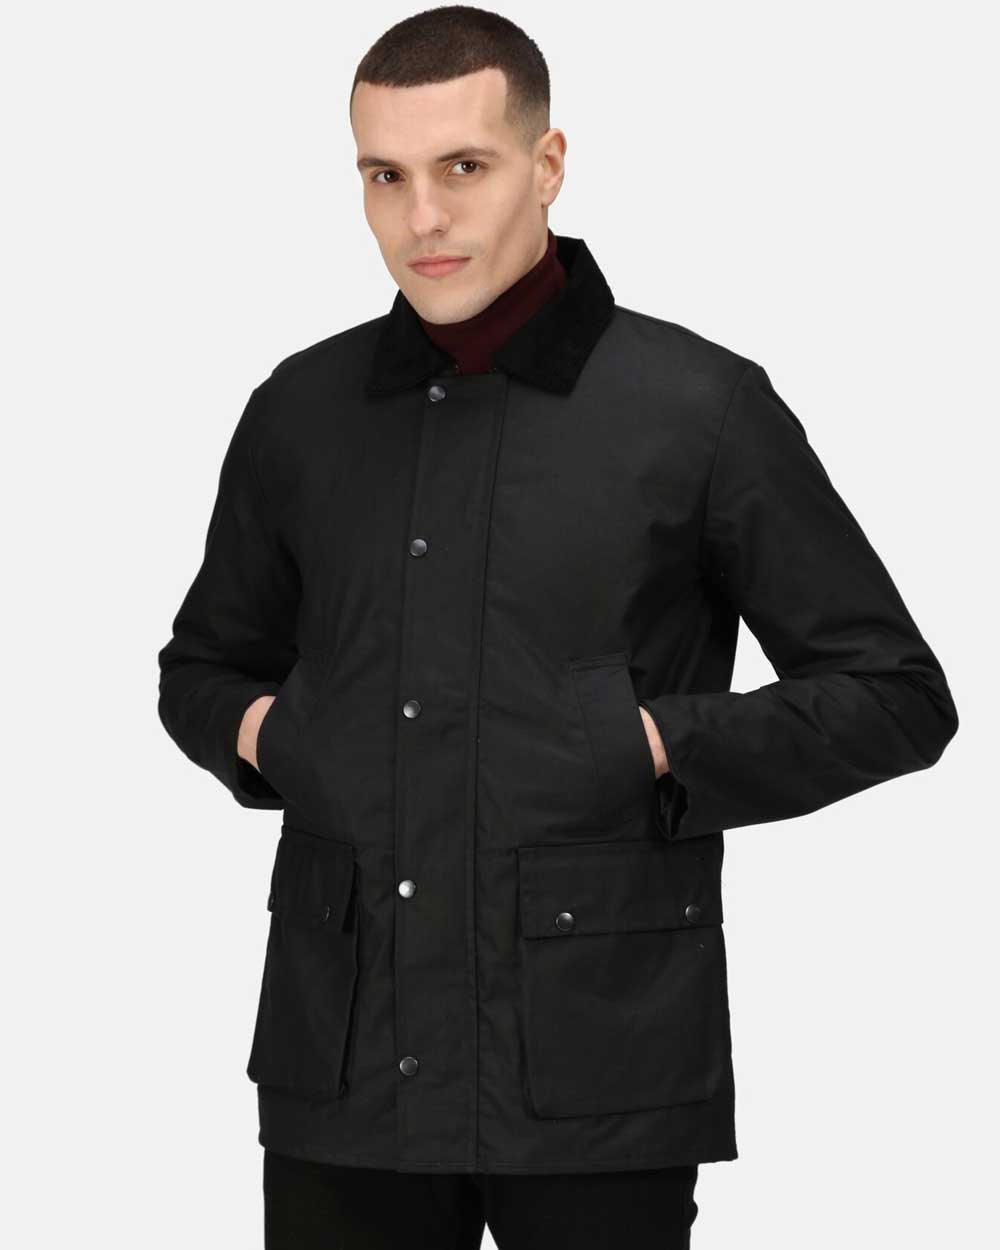 Regatta Banbury Wax Jacket in Black 